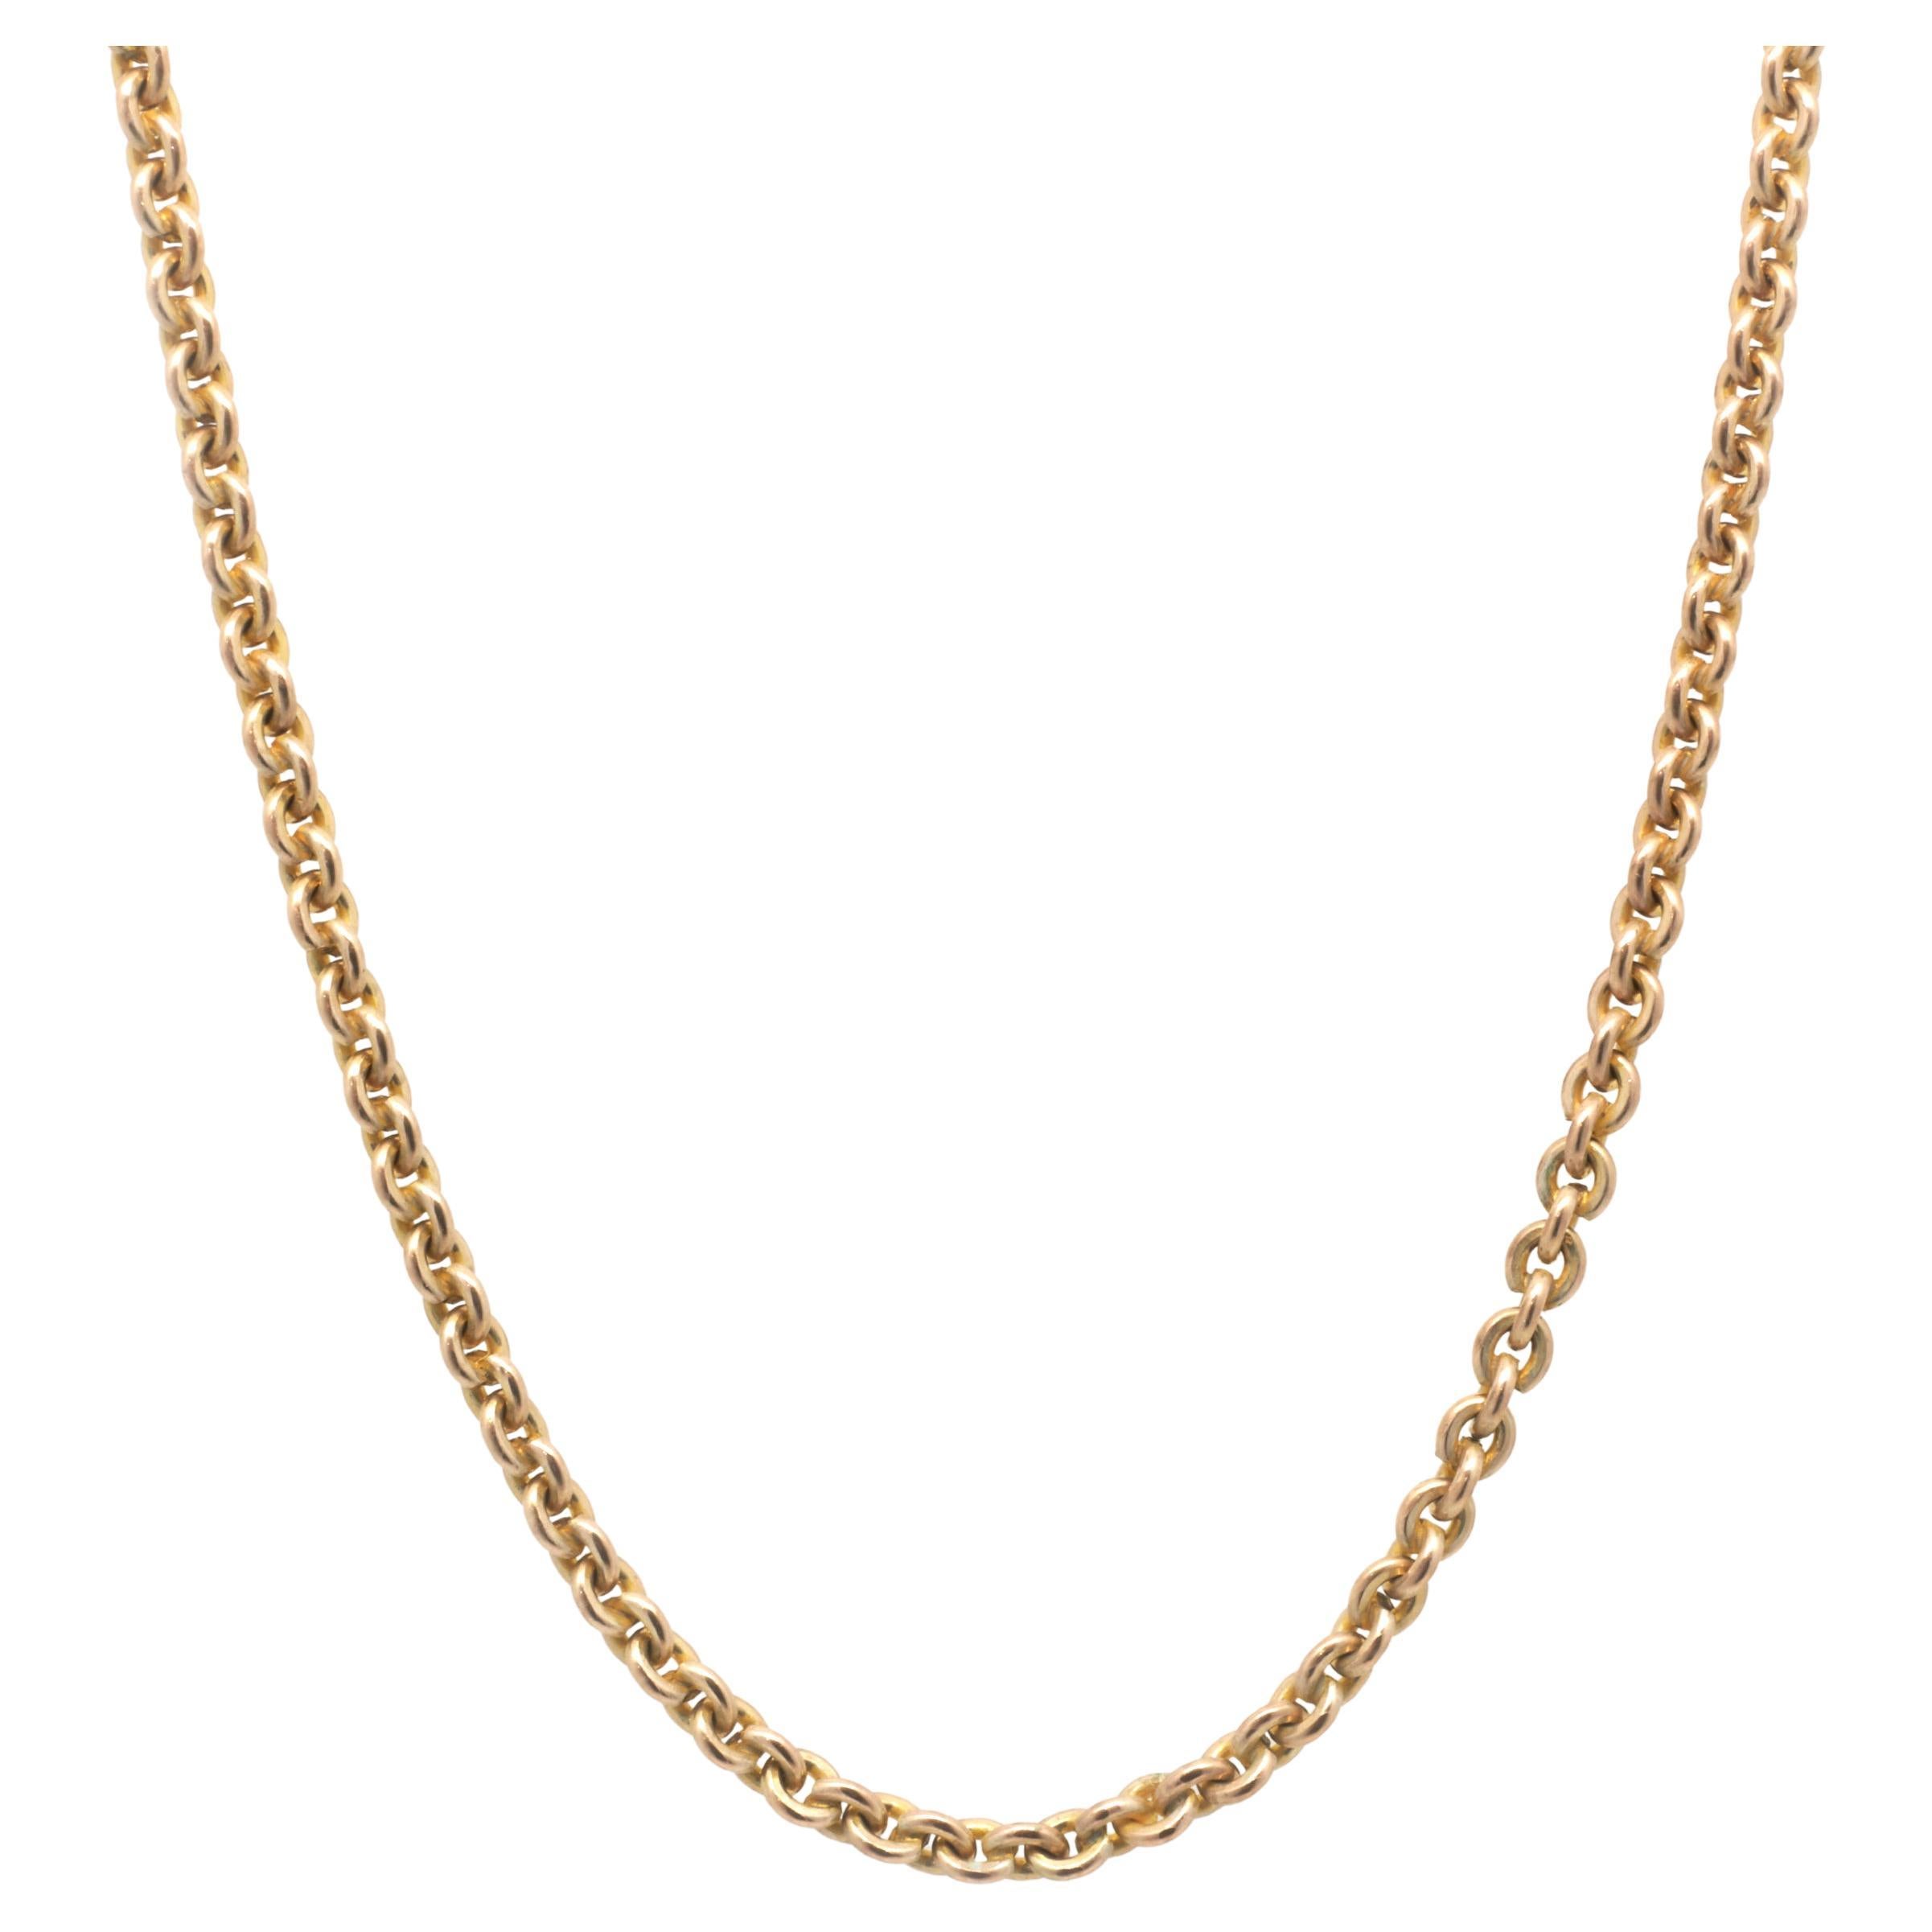 10 Karat Yellow Gold Circle Link Chain Necklace